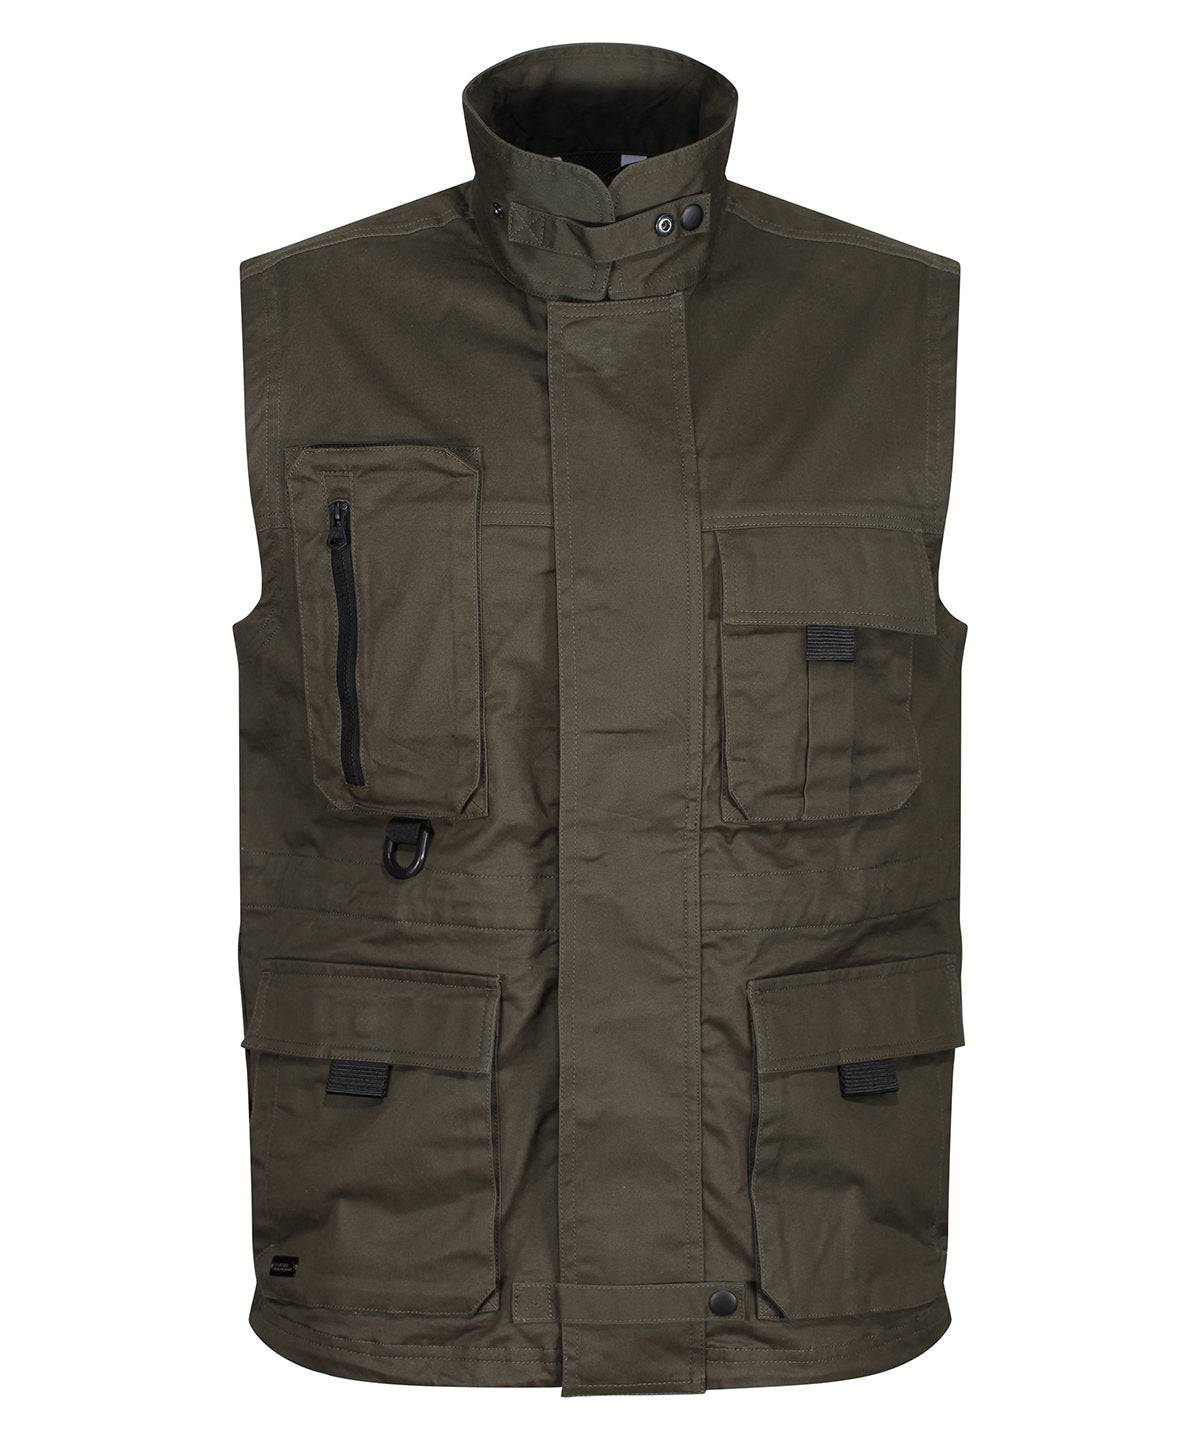 Khaki - Pro utility vest